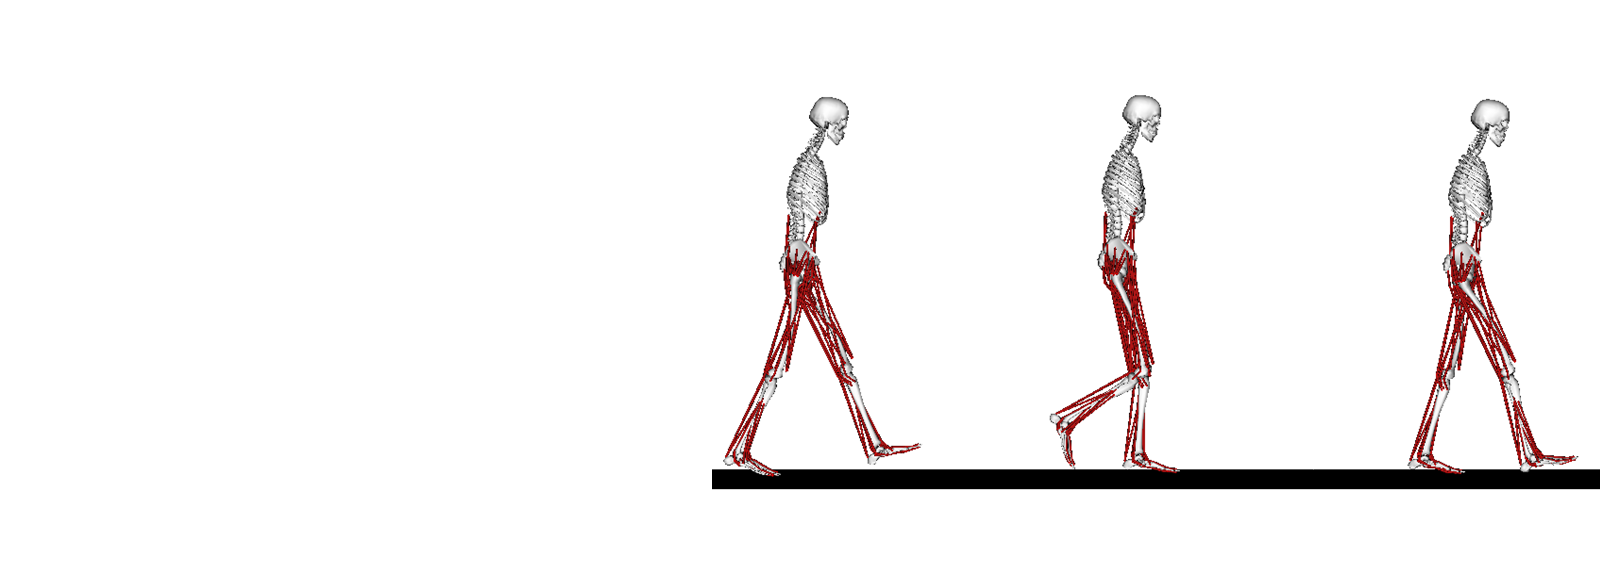 Simulation models of humans walking